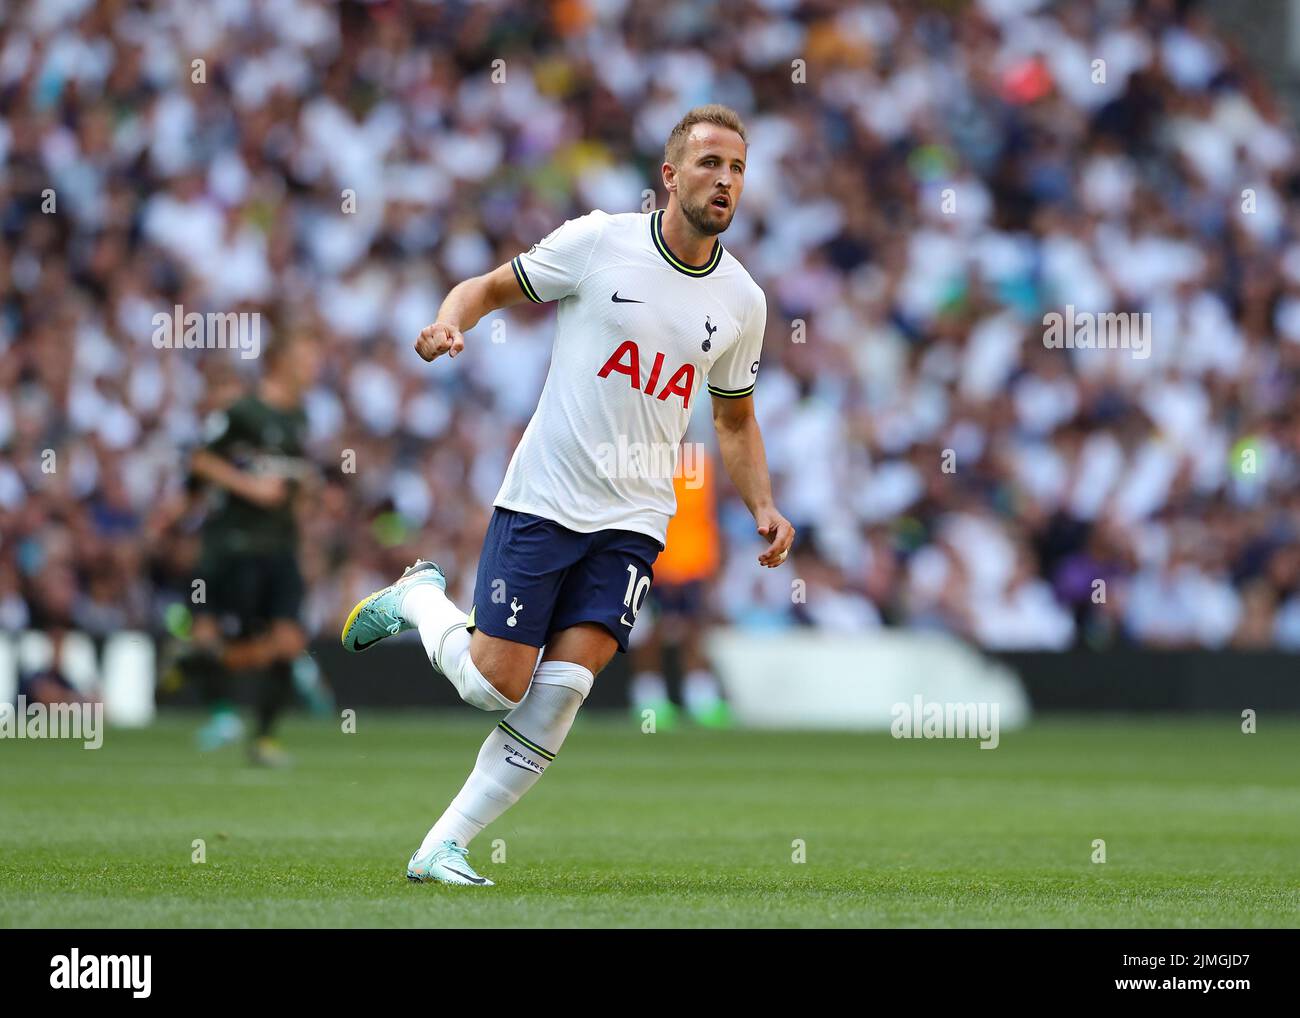 6th August 2022; Tottenham Hotspur Stadium. Tottenham, London, England; Premier League football, Tottenham versus Southampton: Harry Kane of Tottenham Hotspur Stock Photo